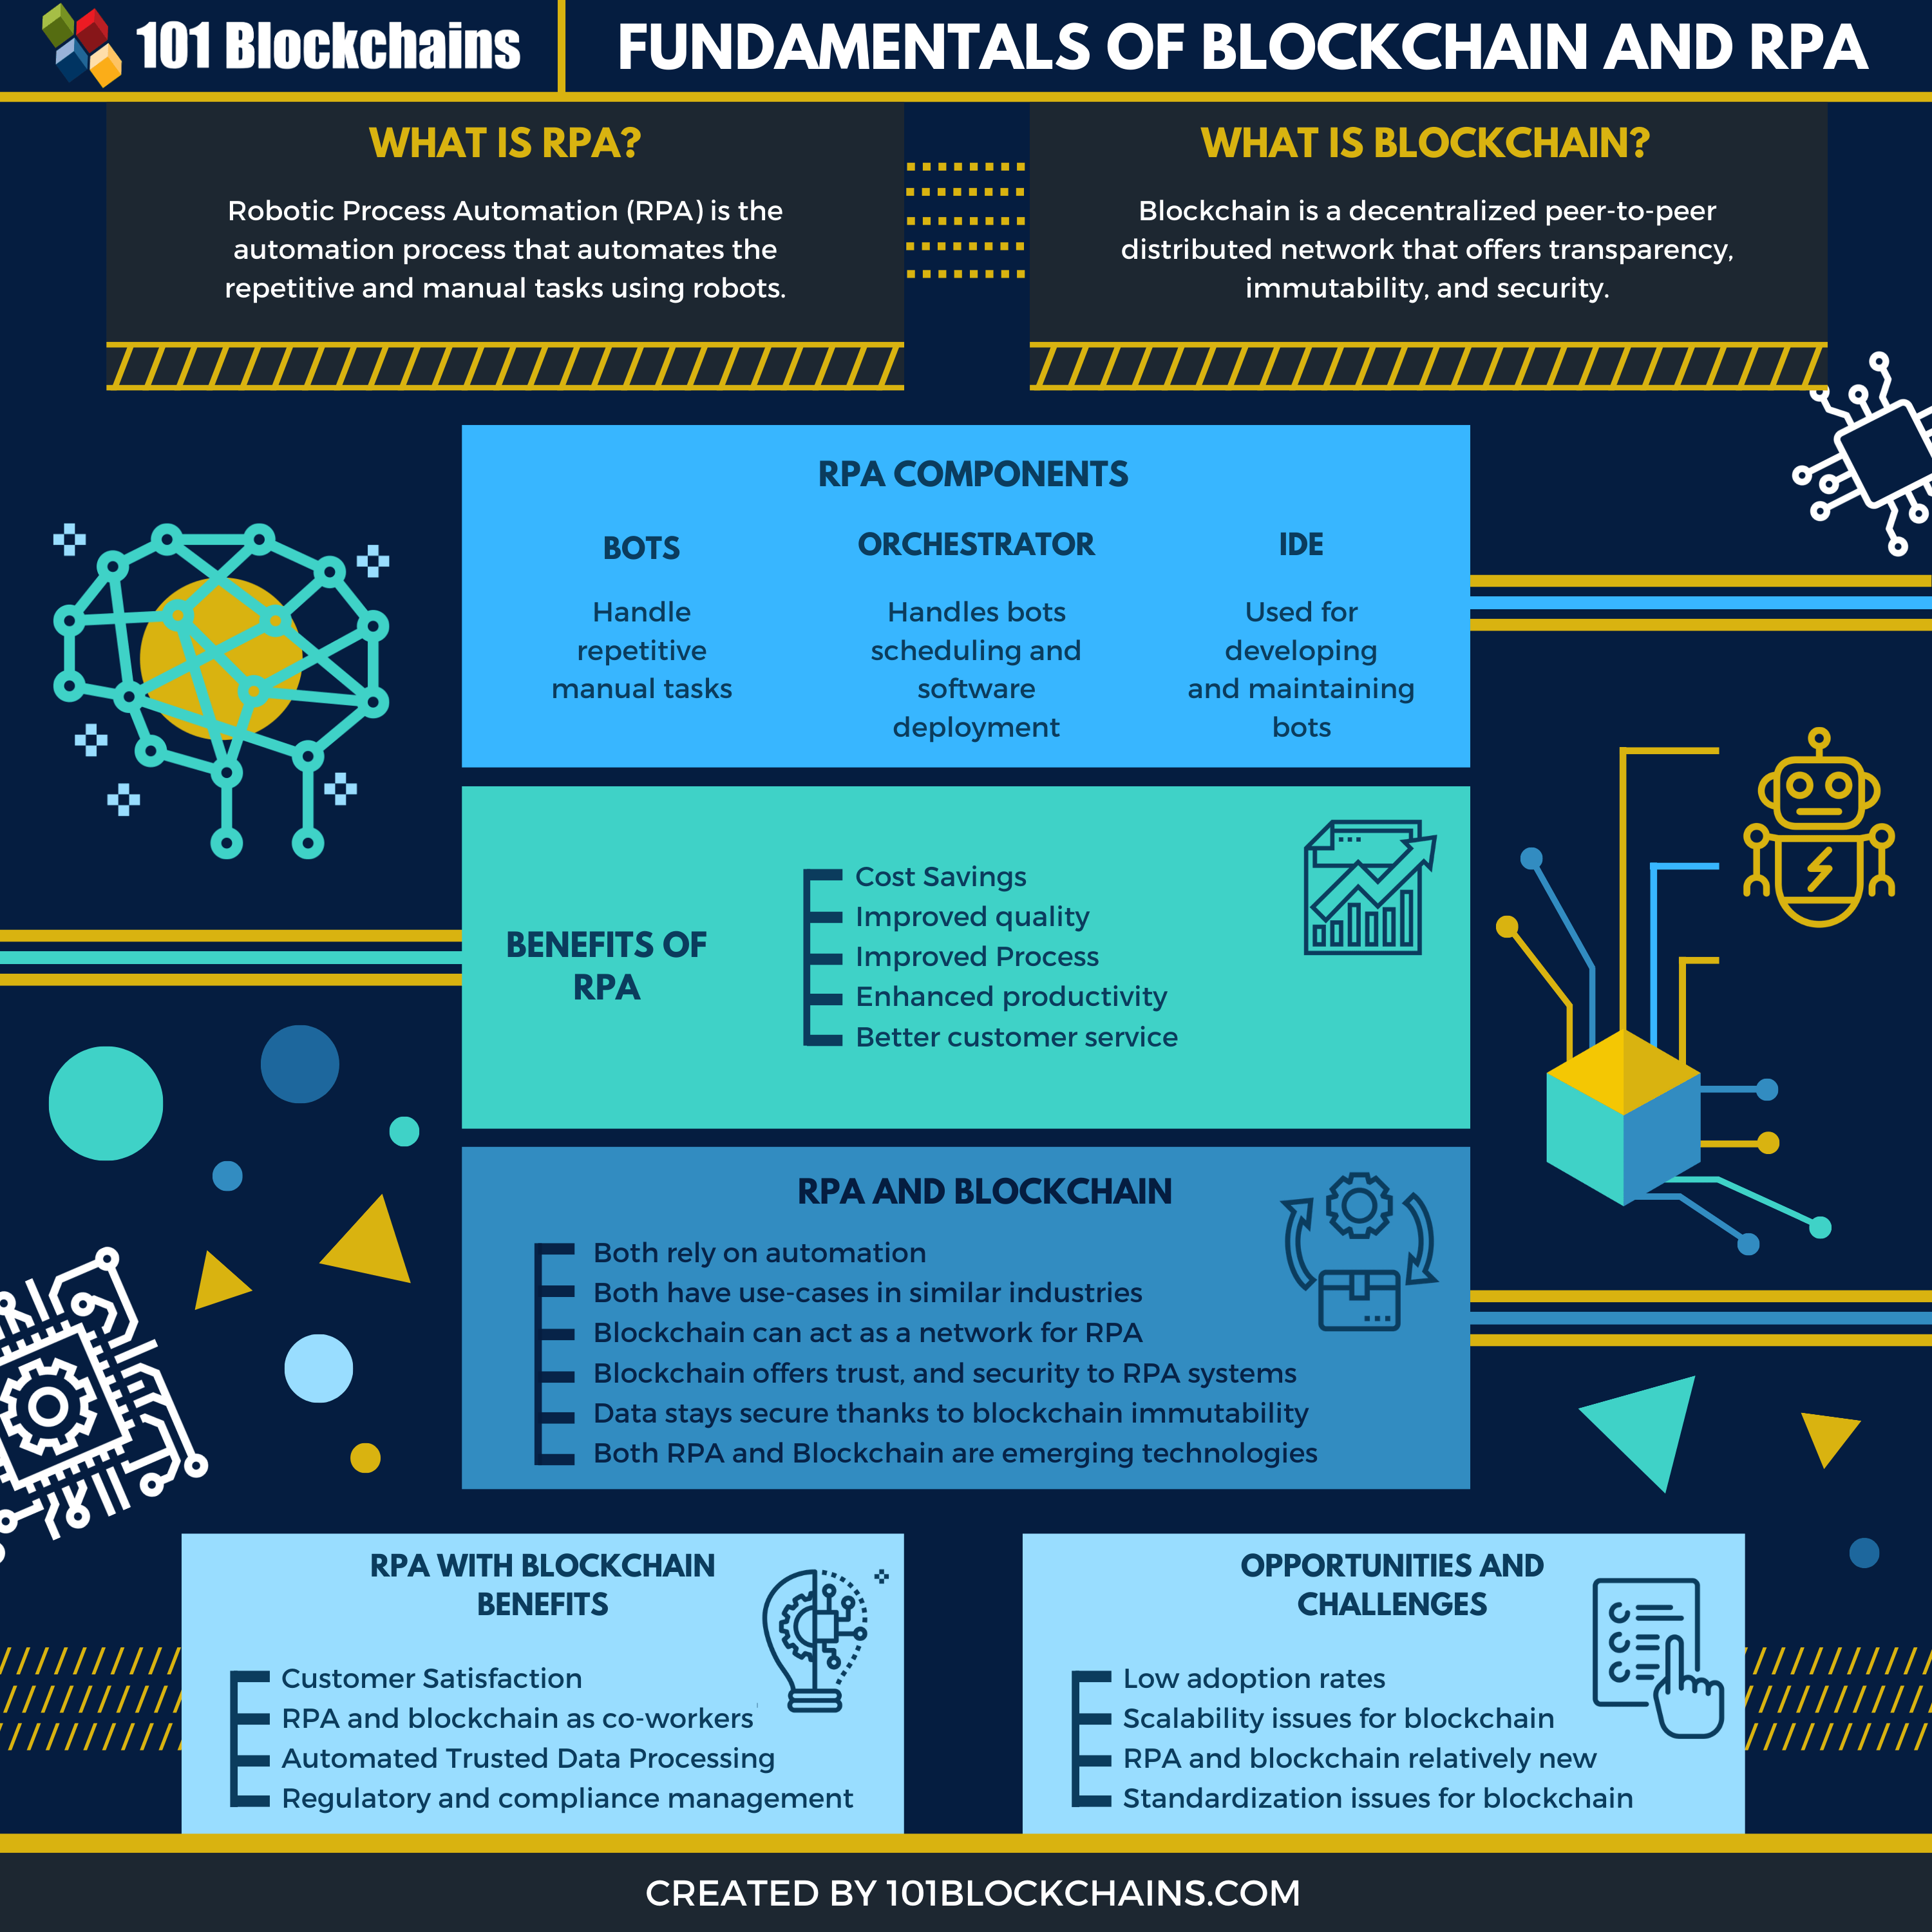 RPA and Blockchain